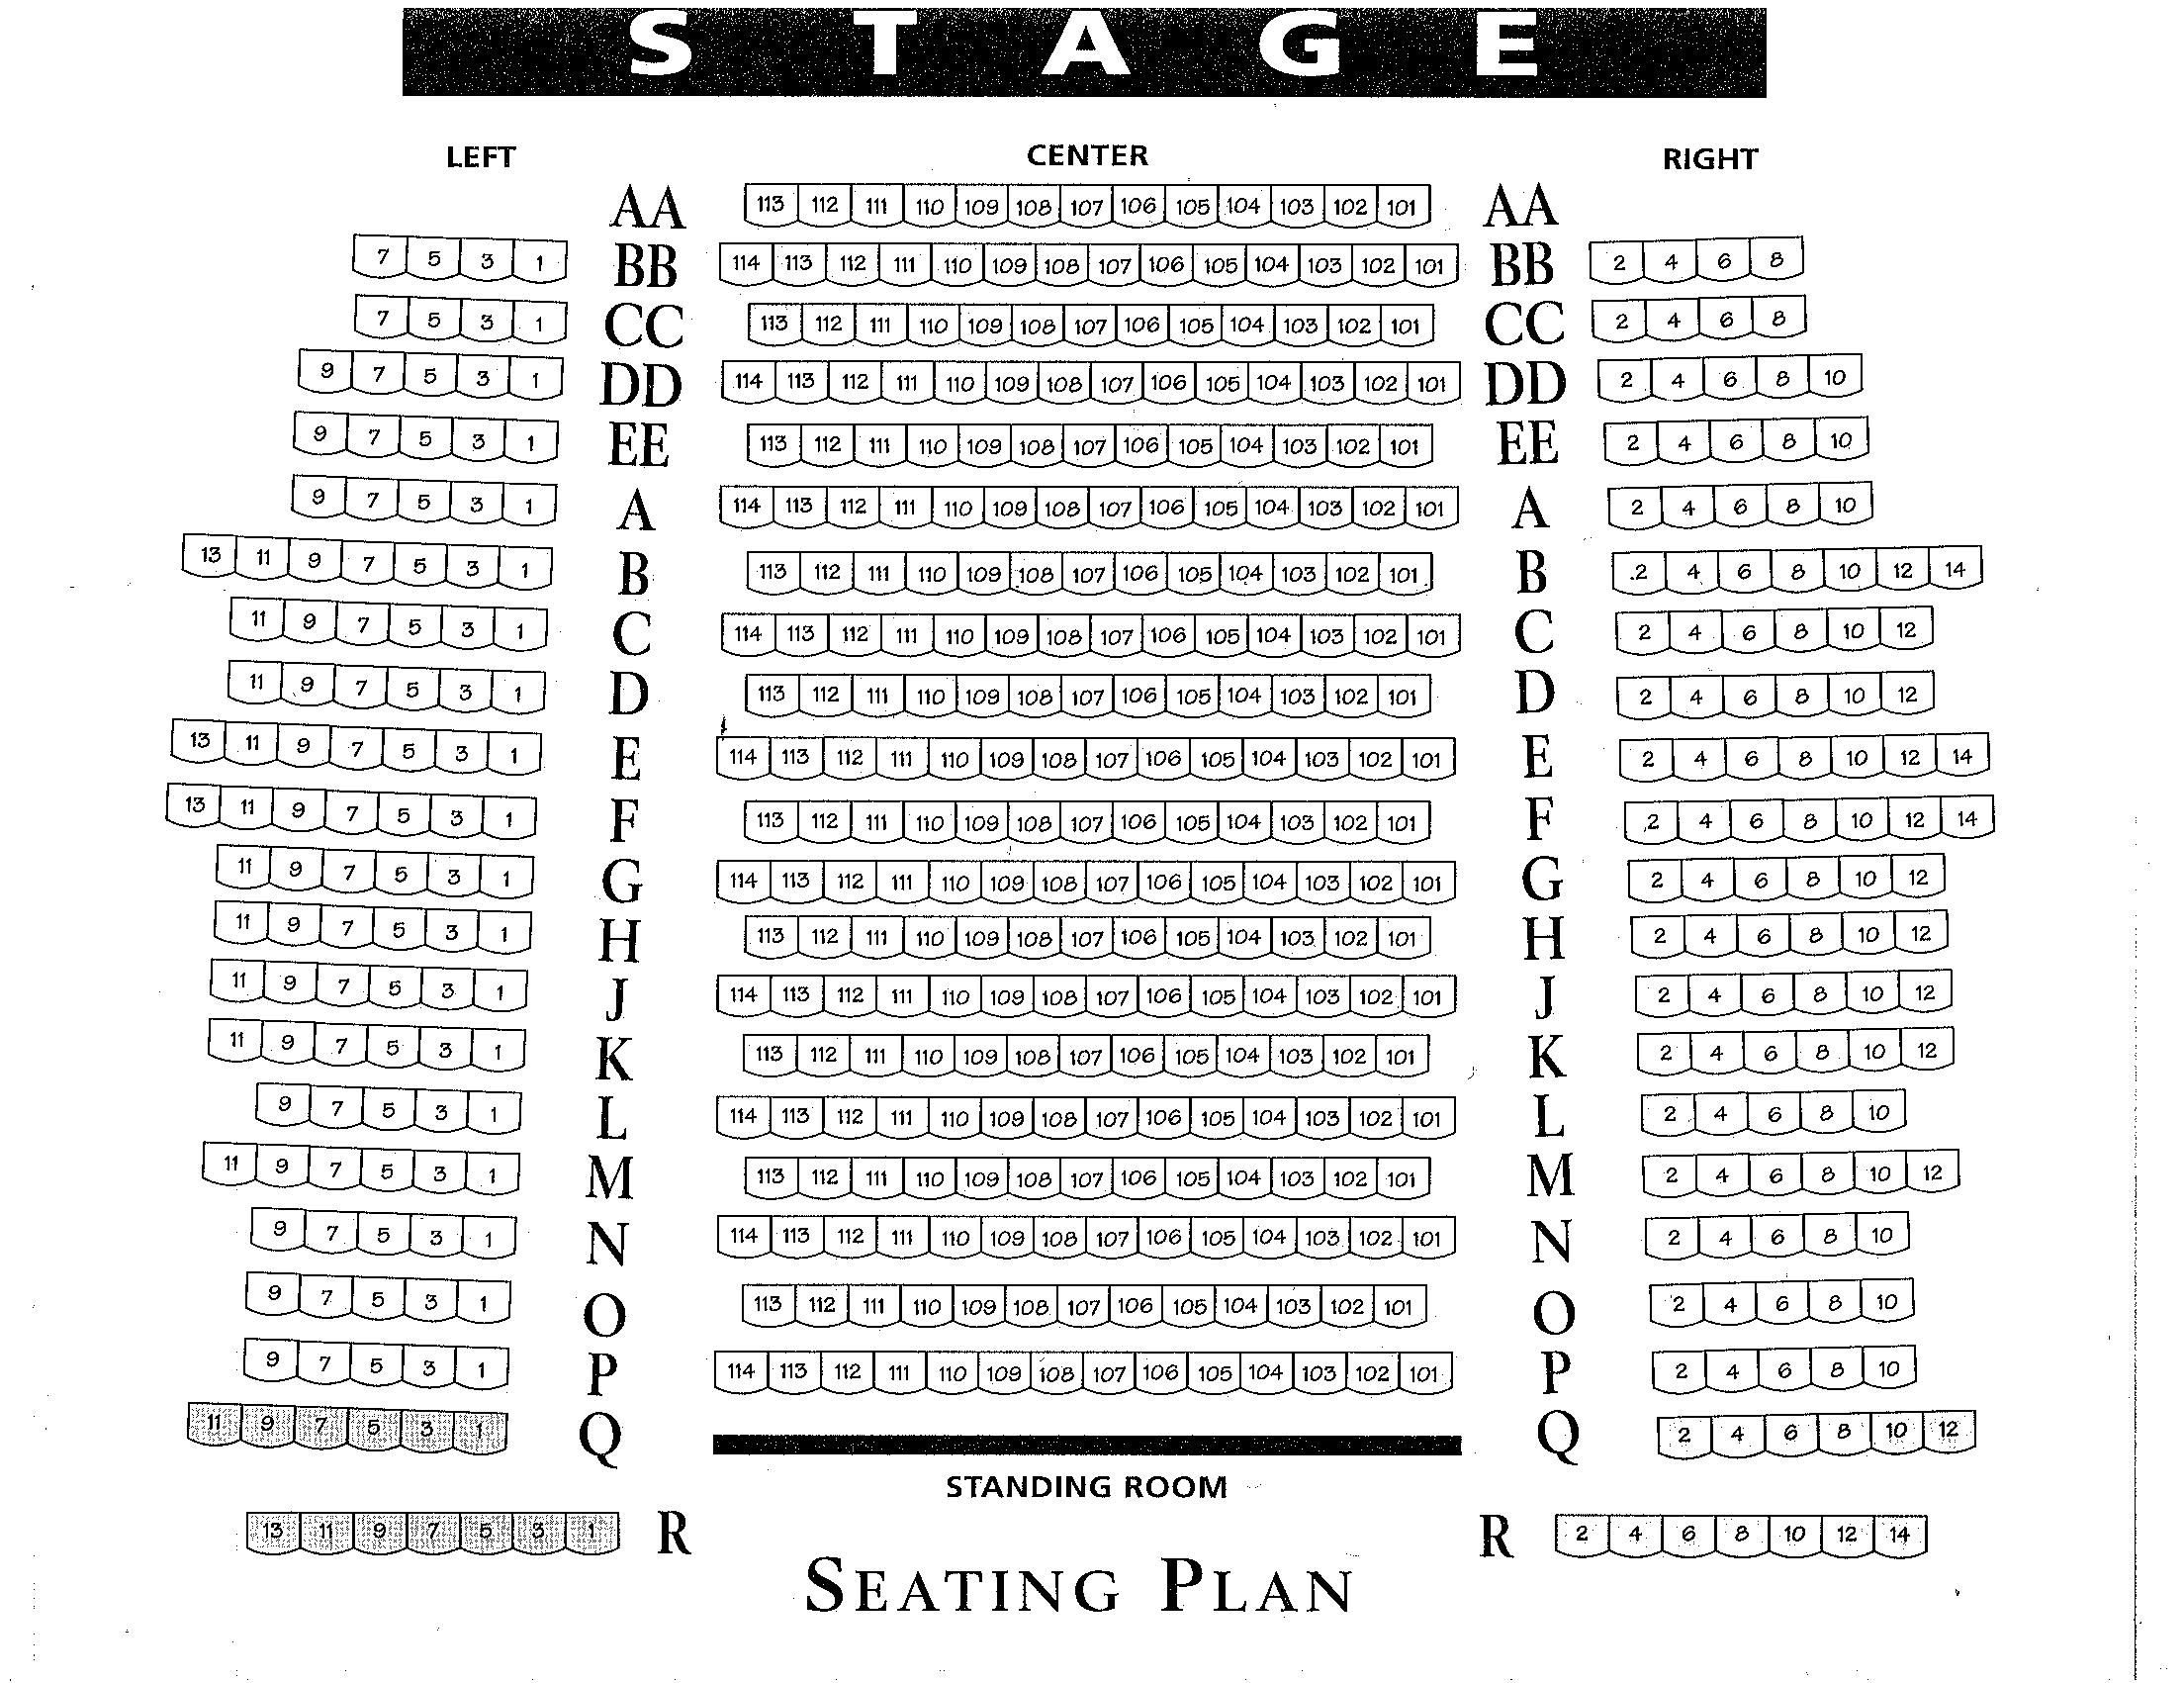 Minetta Lane Theatre Seating Chart